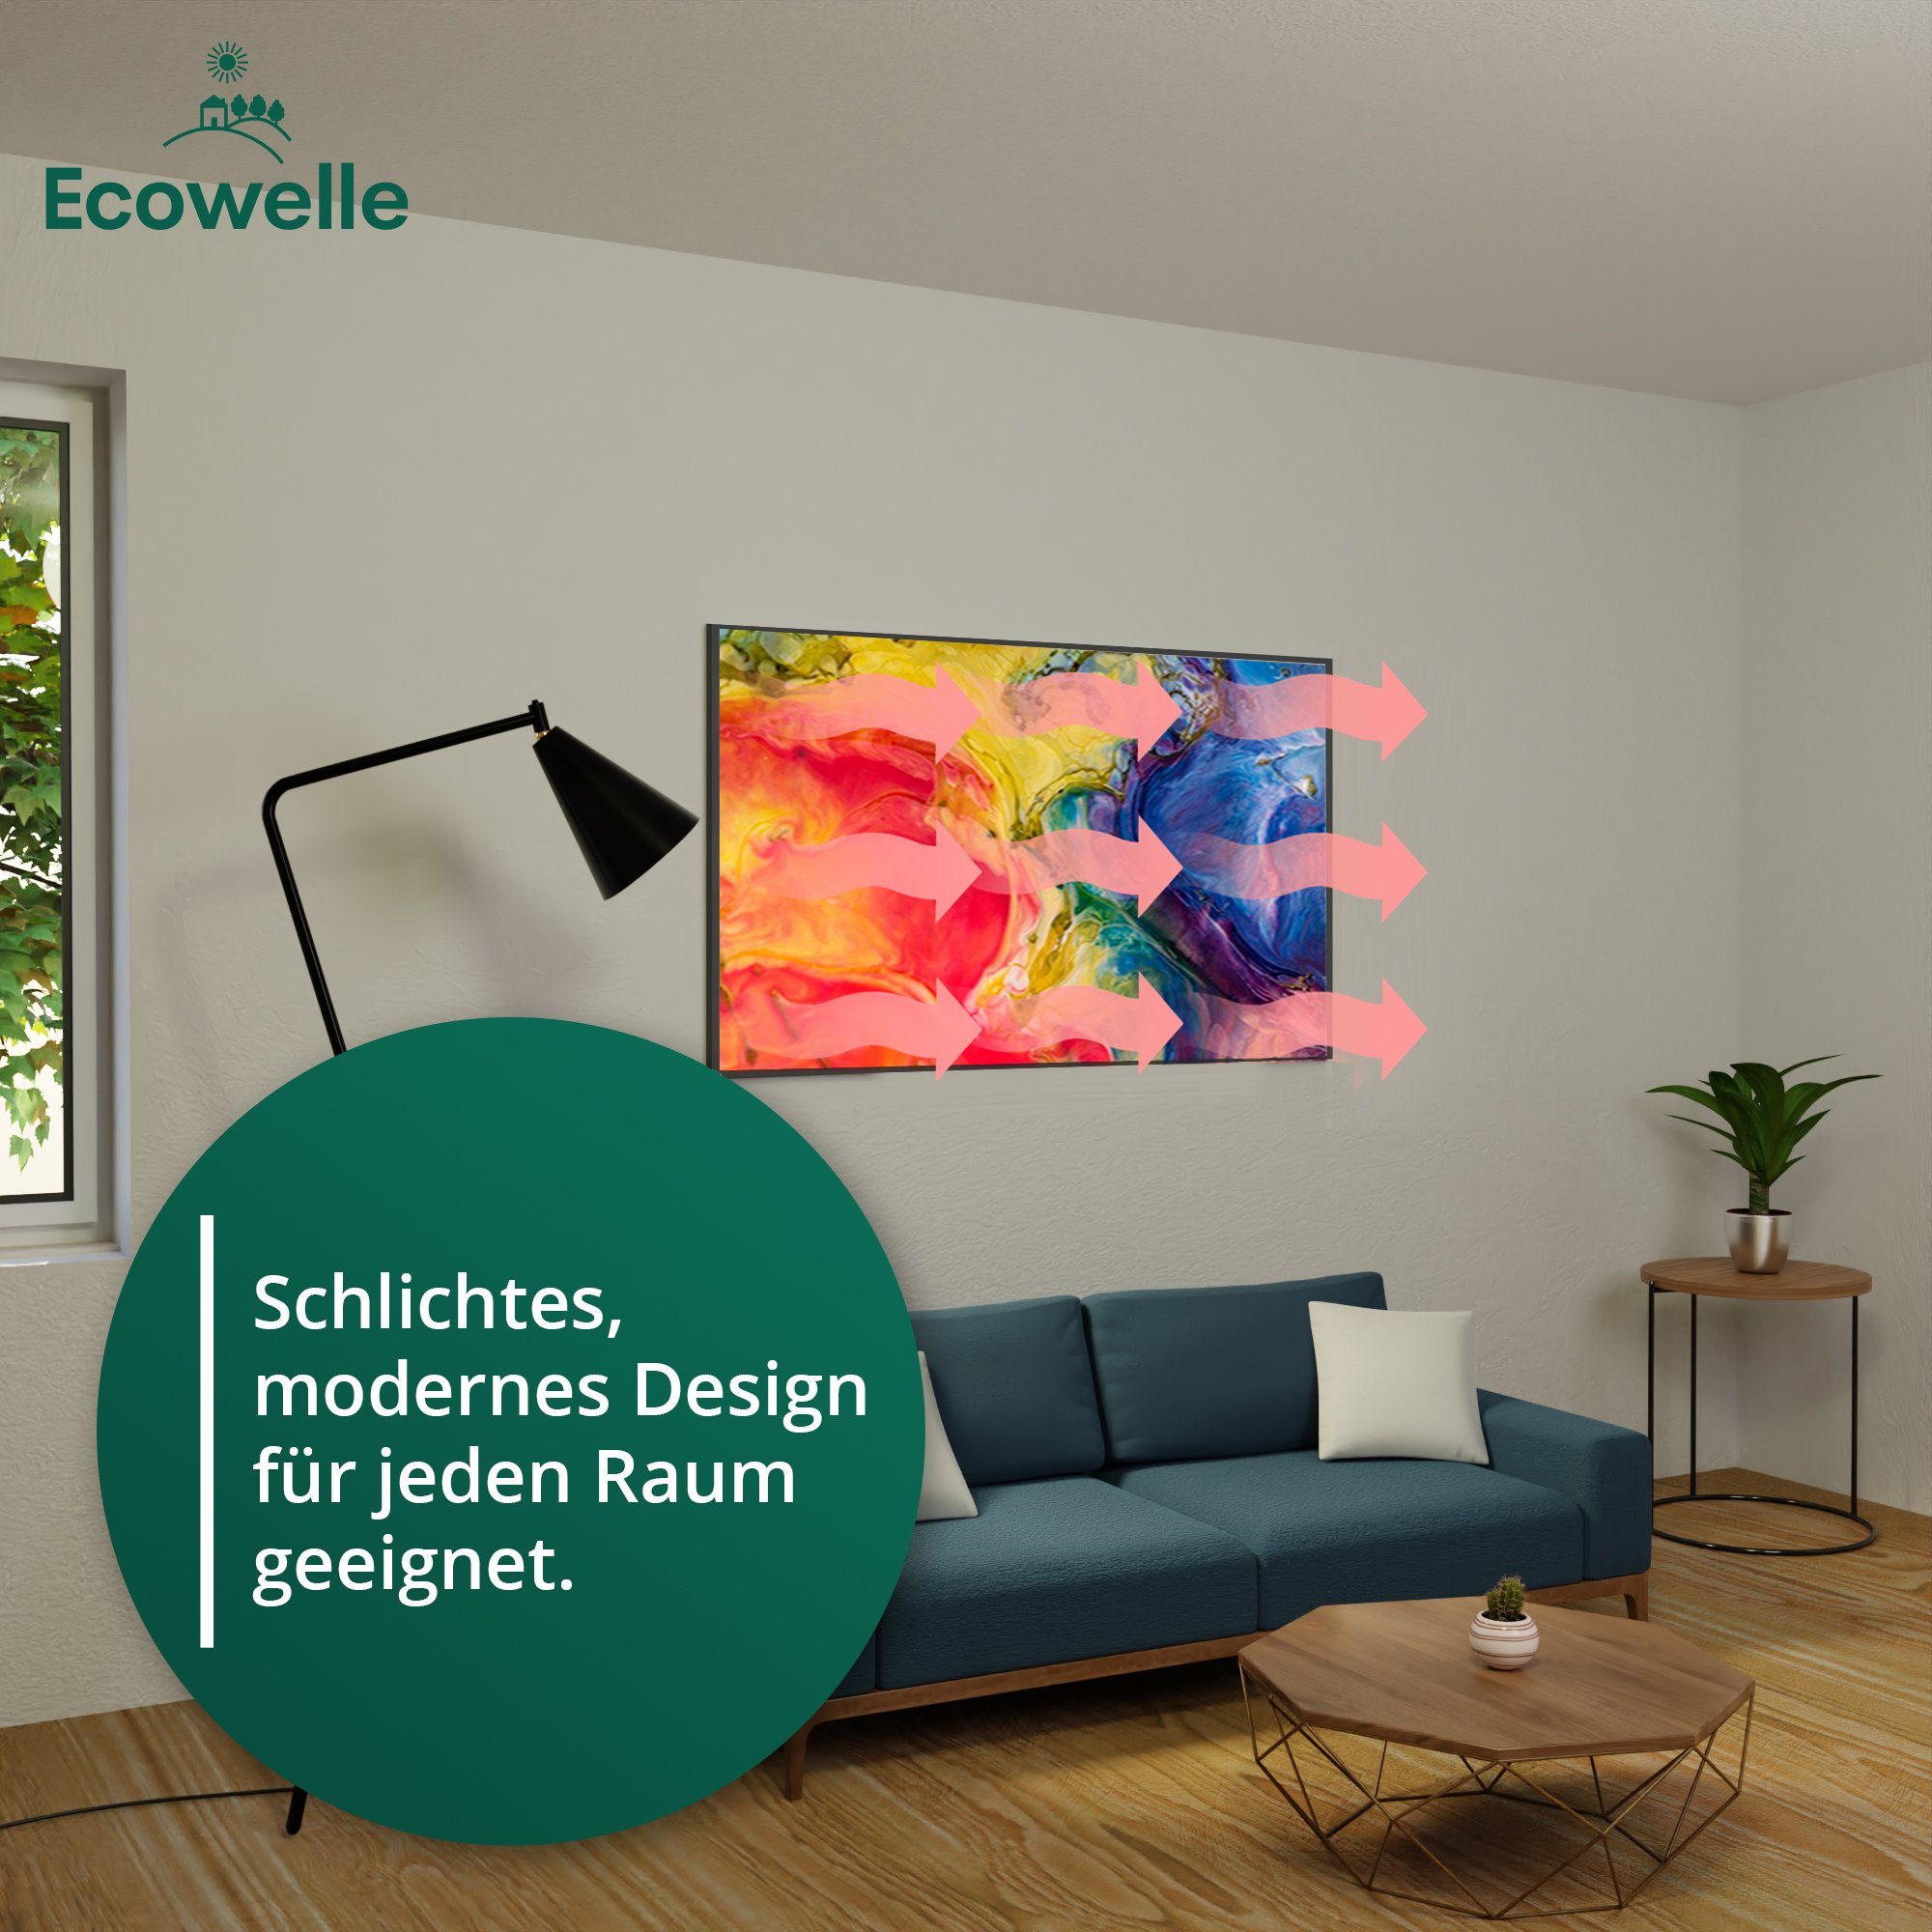 Thermostat, Infrarotheizung + Germany Wifi in Ecowelle Elektroheizung App 350-1200 Weiss Watt Made